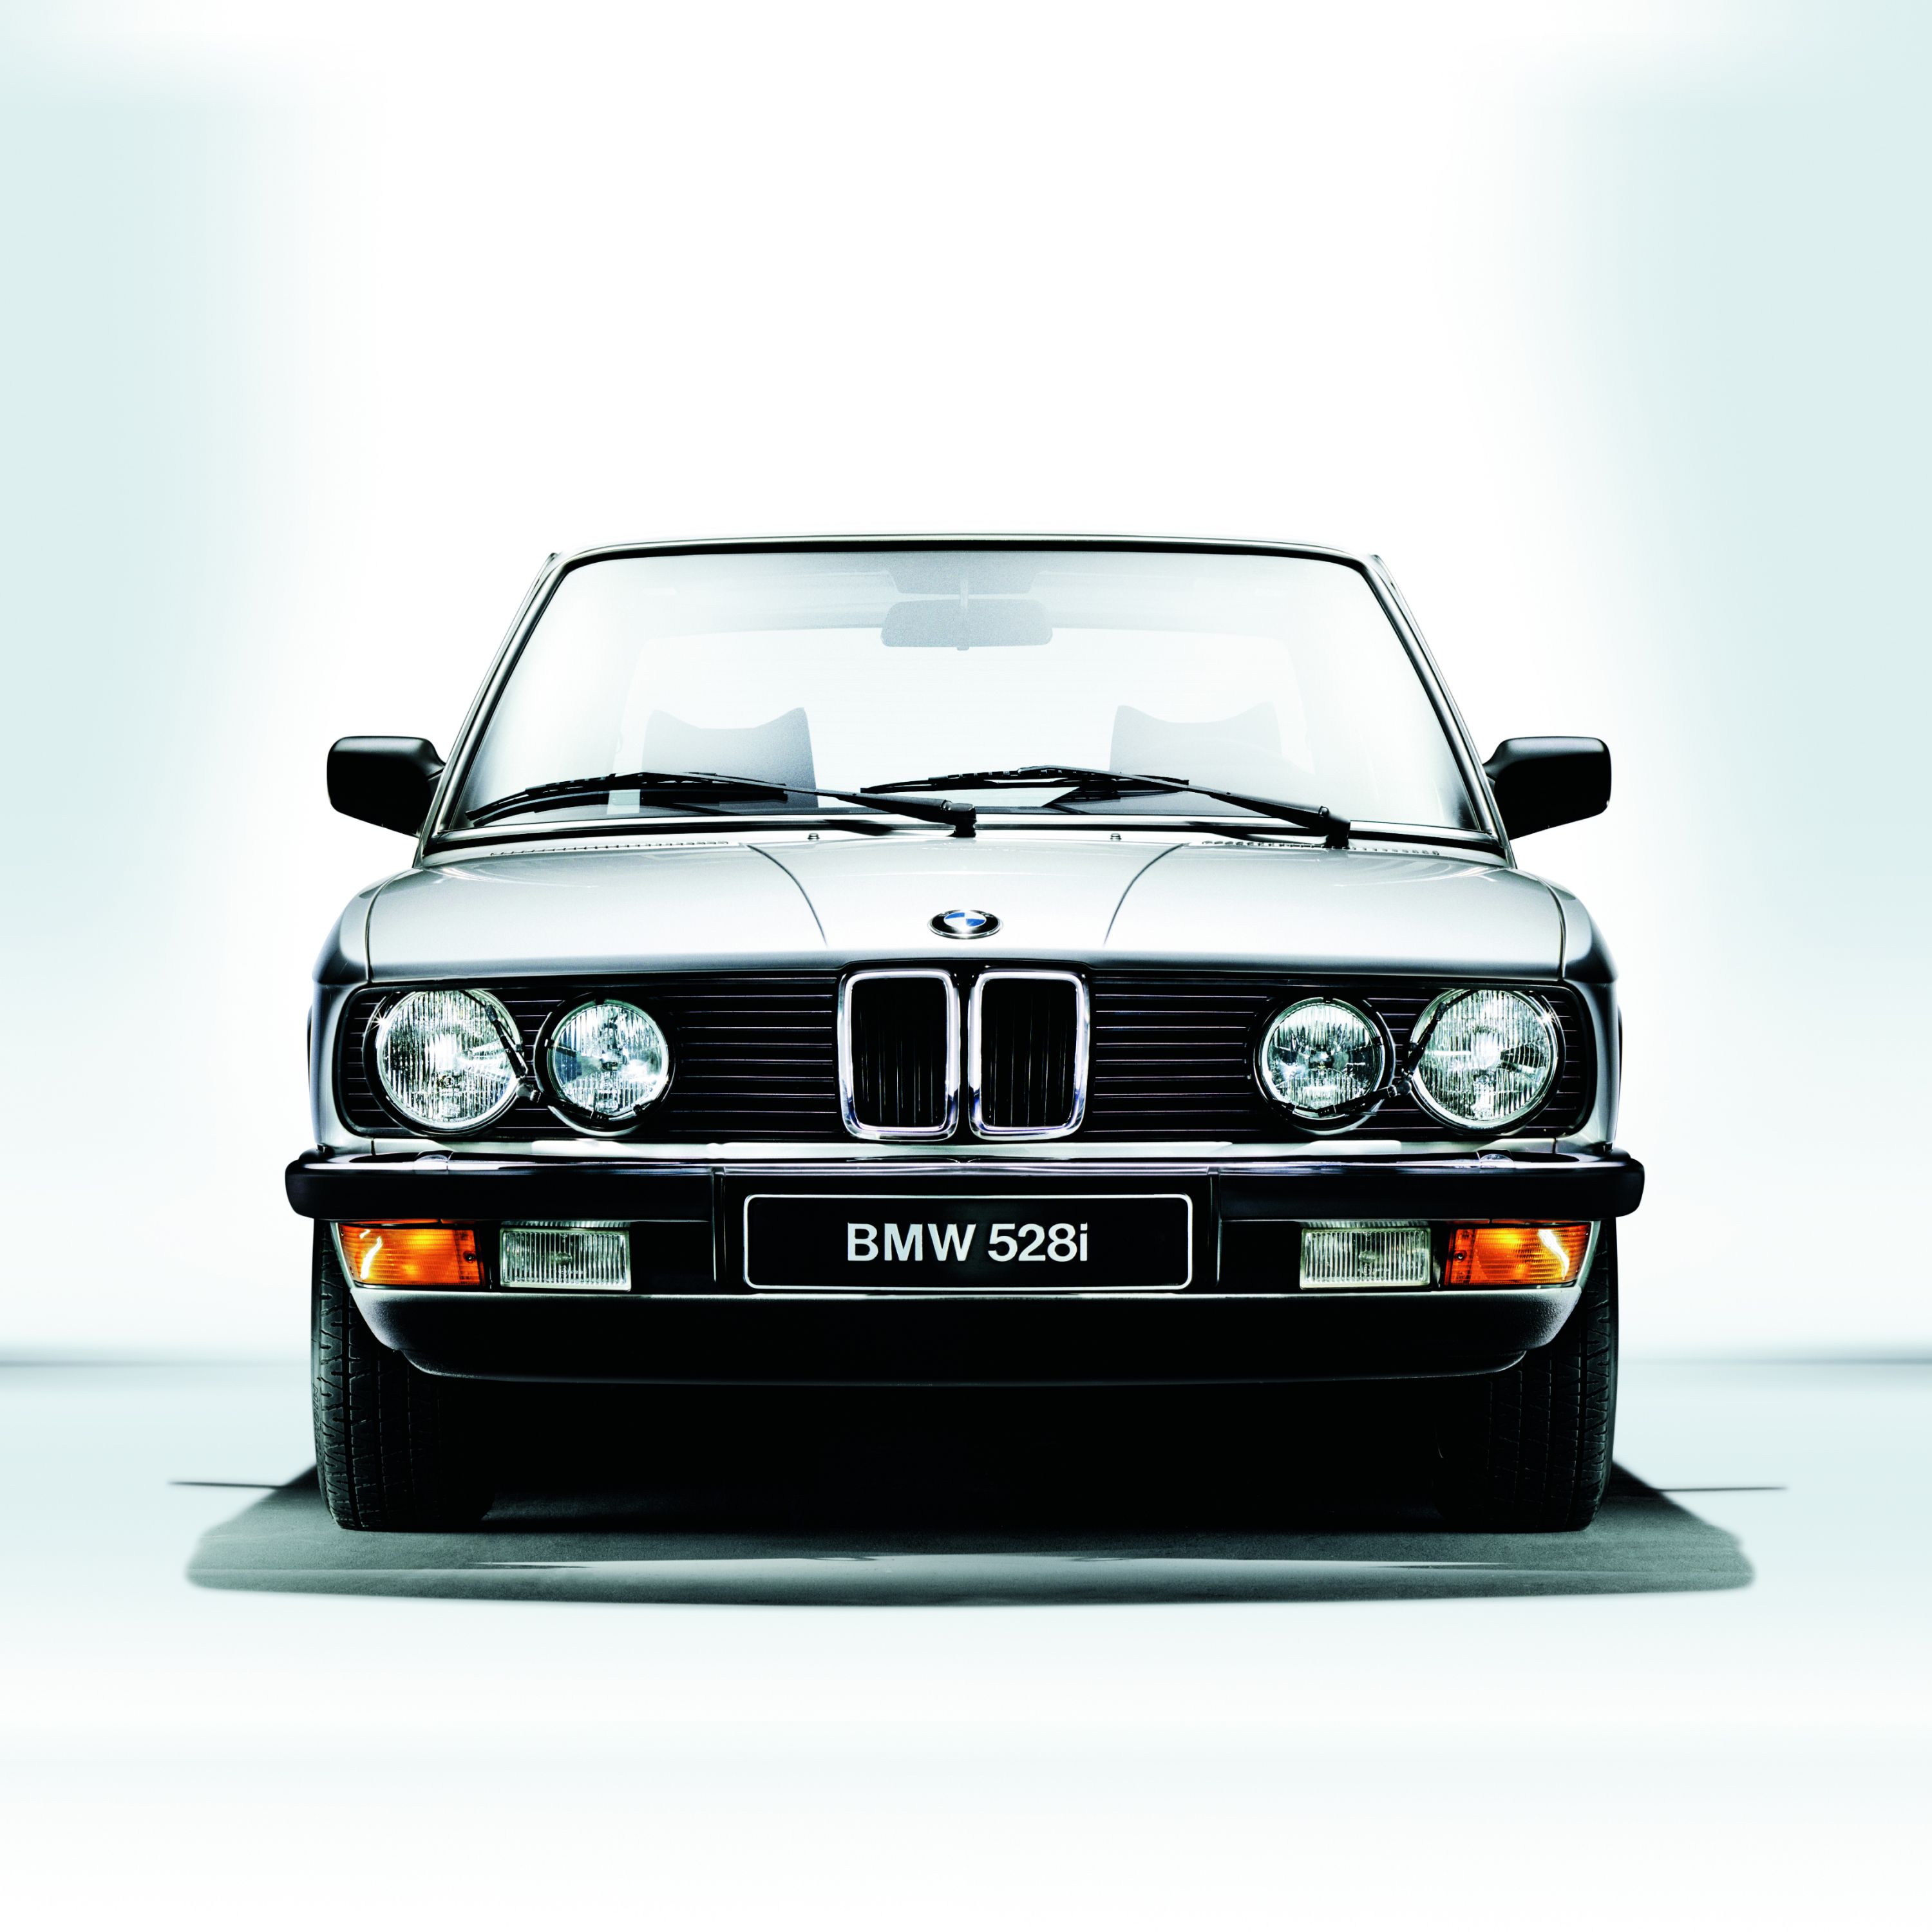 Genuine BMW UK Parts Online - Servicing & Repairs